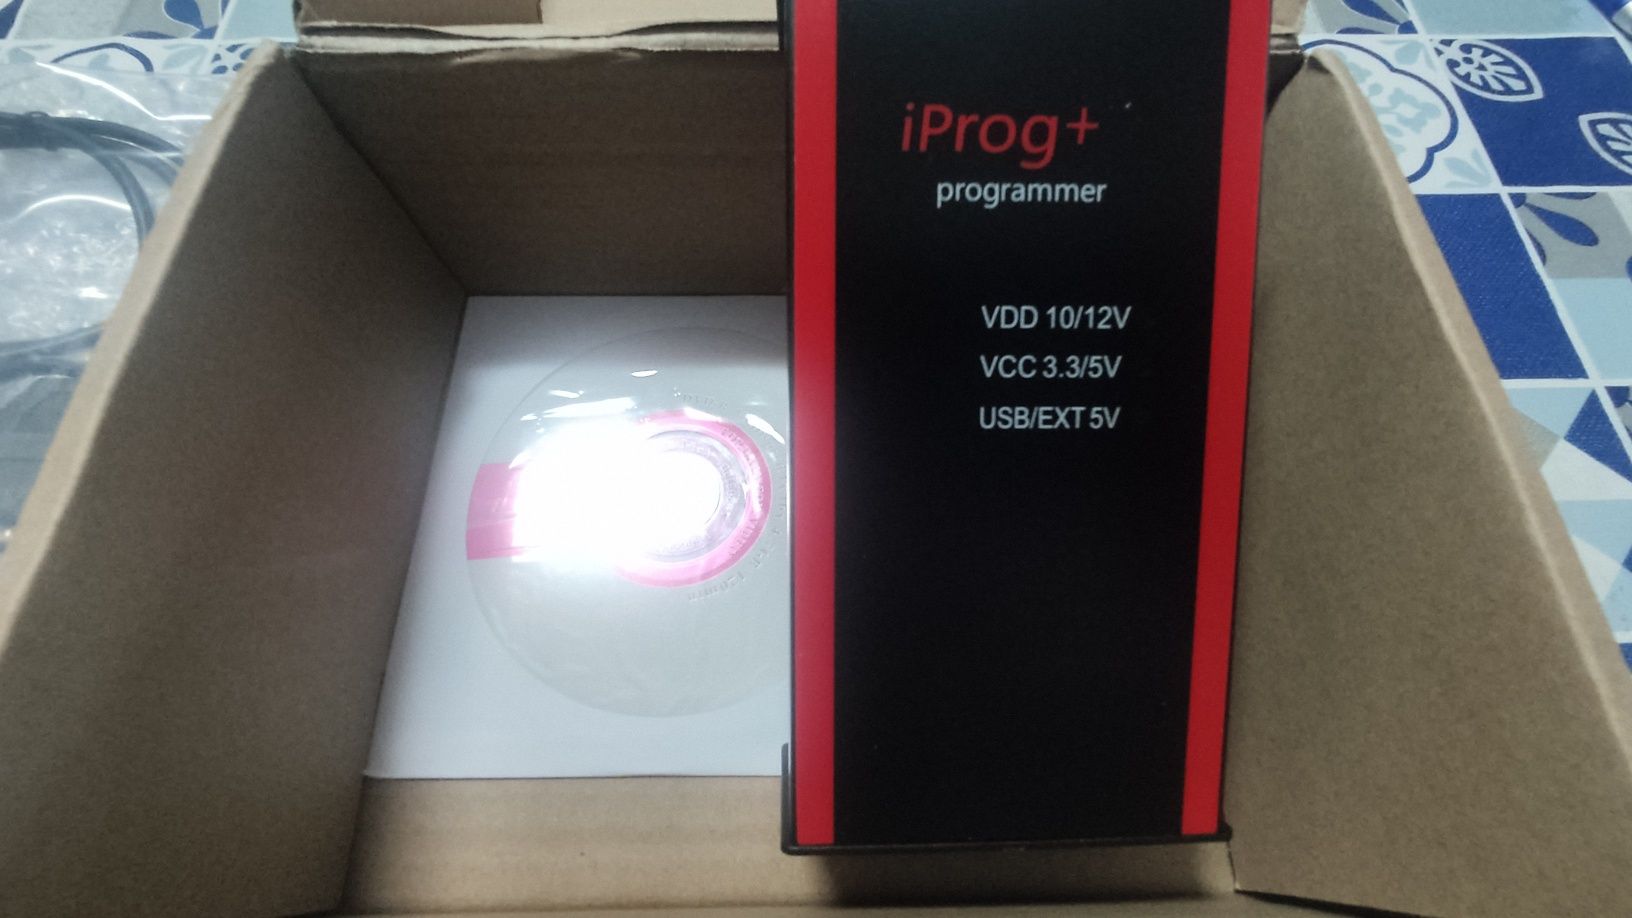 Programador iprog + pro v87 completo